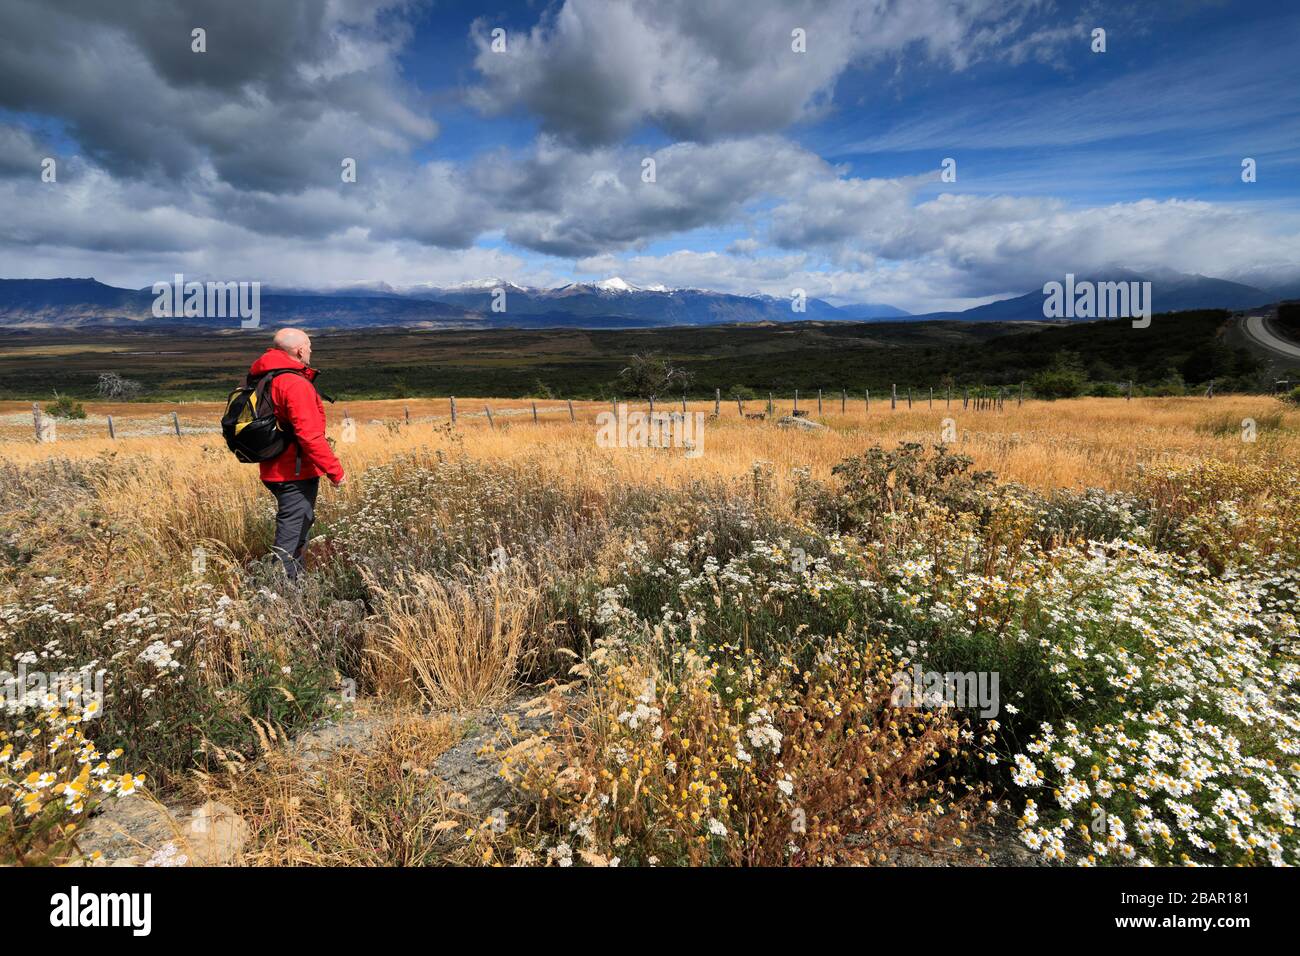 Wildblumenwiese im Nationalpark Torres de Paine, Patagonia Steppe, Patagonien, Chile, Südamerika Stockfoto